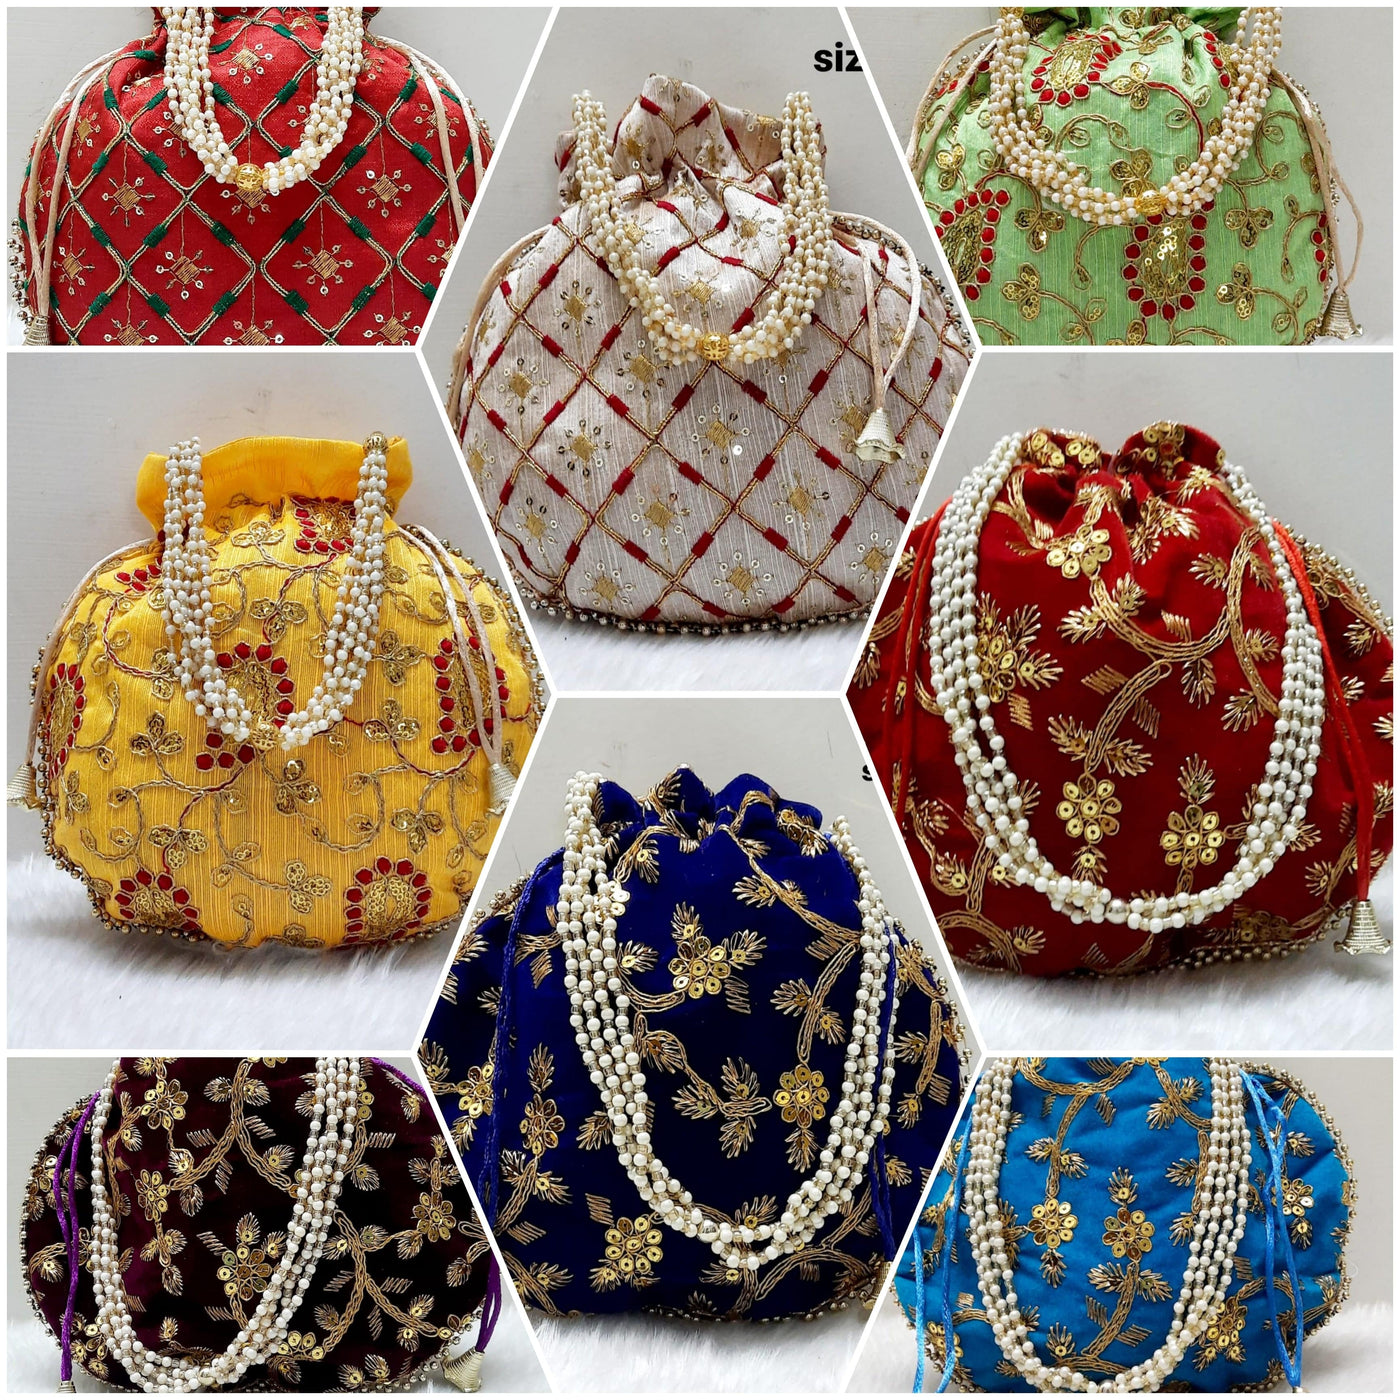 LAMANSH ® Women's Potli Bag Pack of 50 LAMANSH (8*12 inch) Pack of 50 Pcs Potli bags for women handbags traditional Indian Ethnic Embroidery Fashion Potli